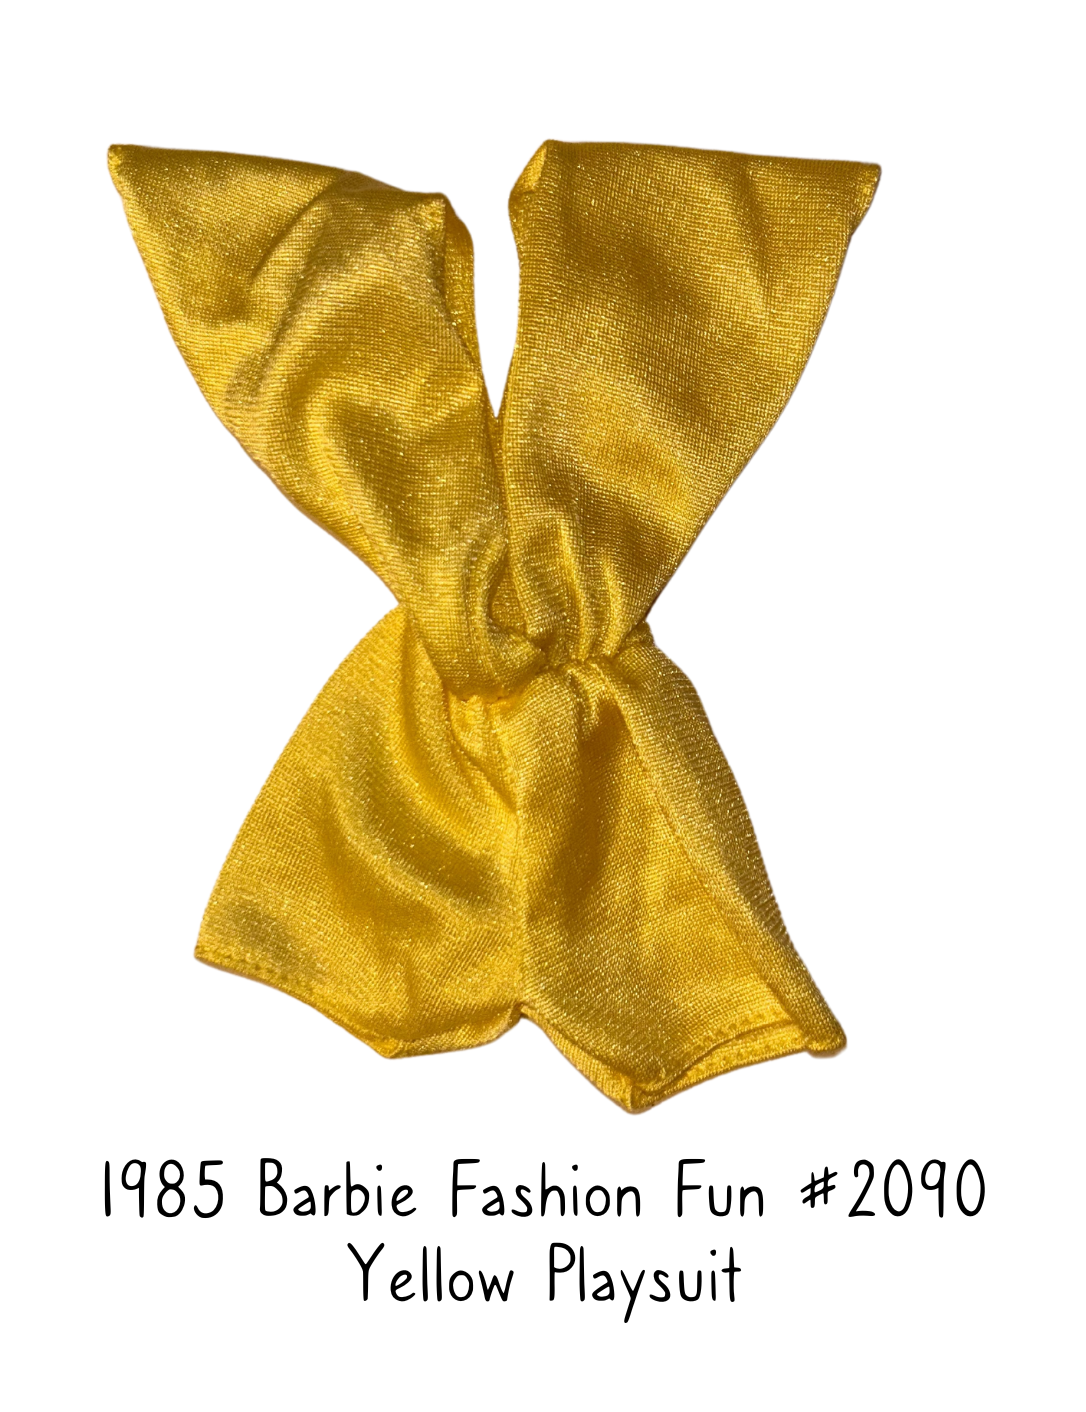 1985 Barbie Fashion Fun #2090 Yellow Playsuit